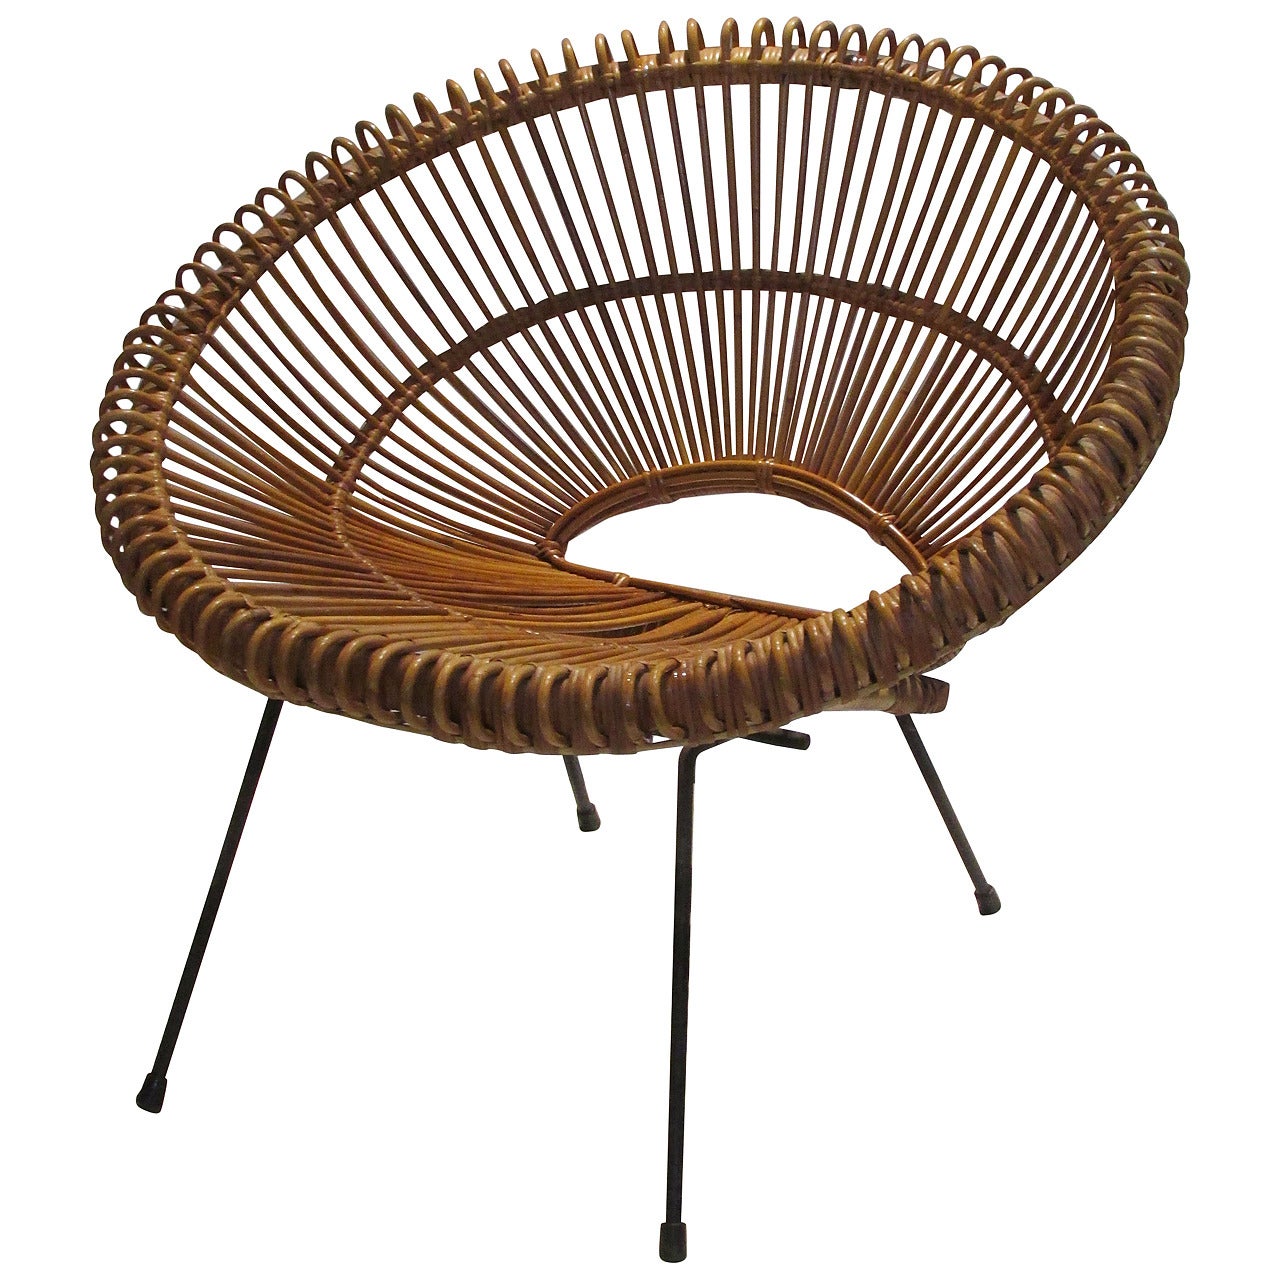 Italian 1950s Rattan Hoop Chair Attributed to Franco Albini